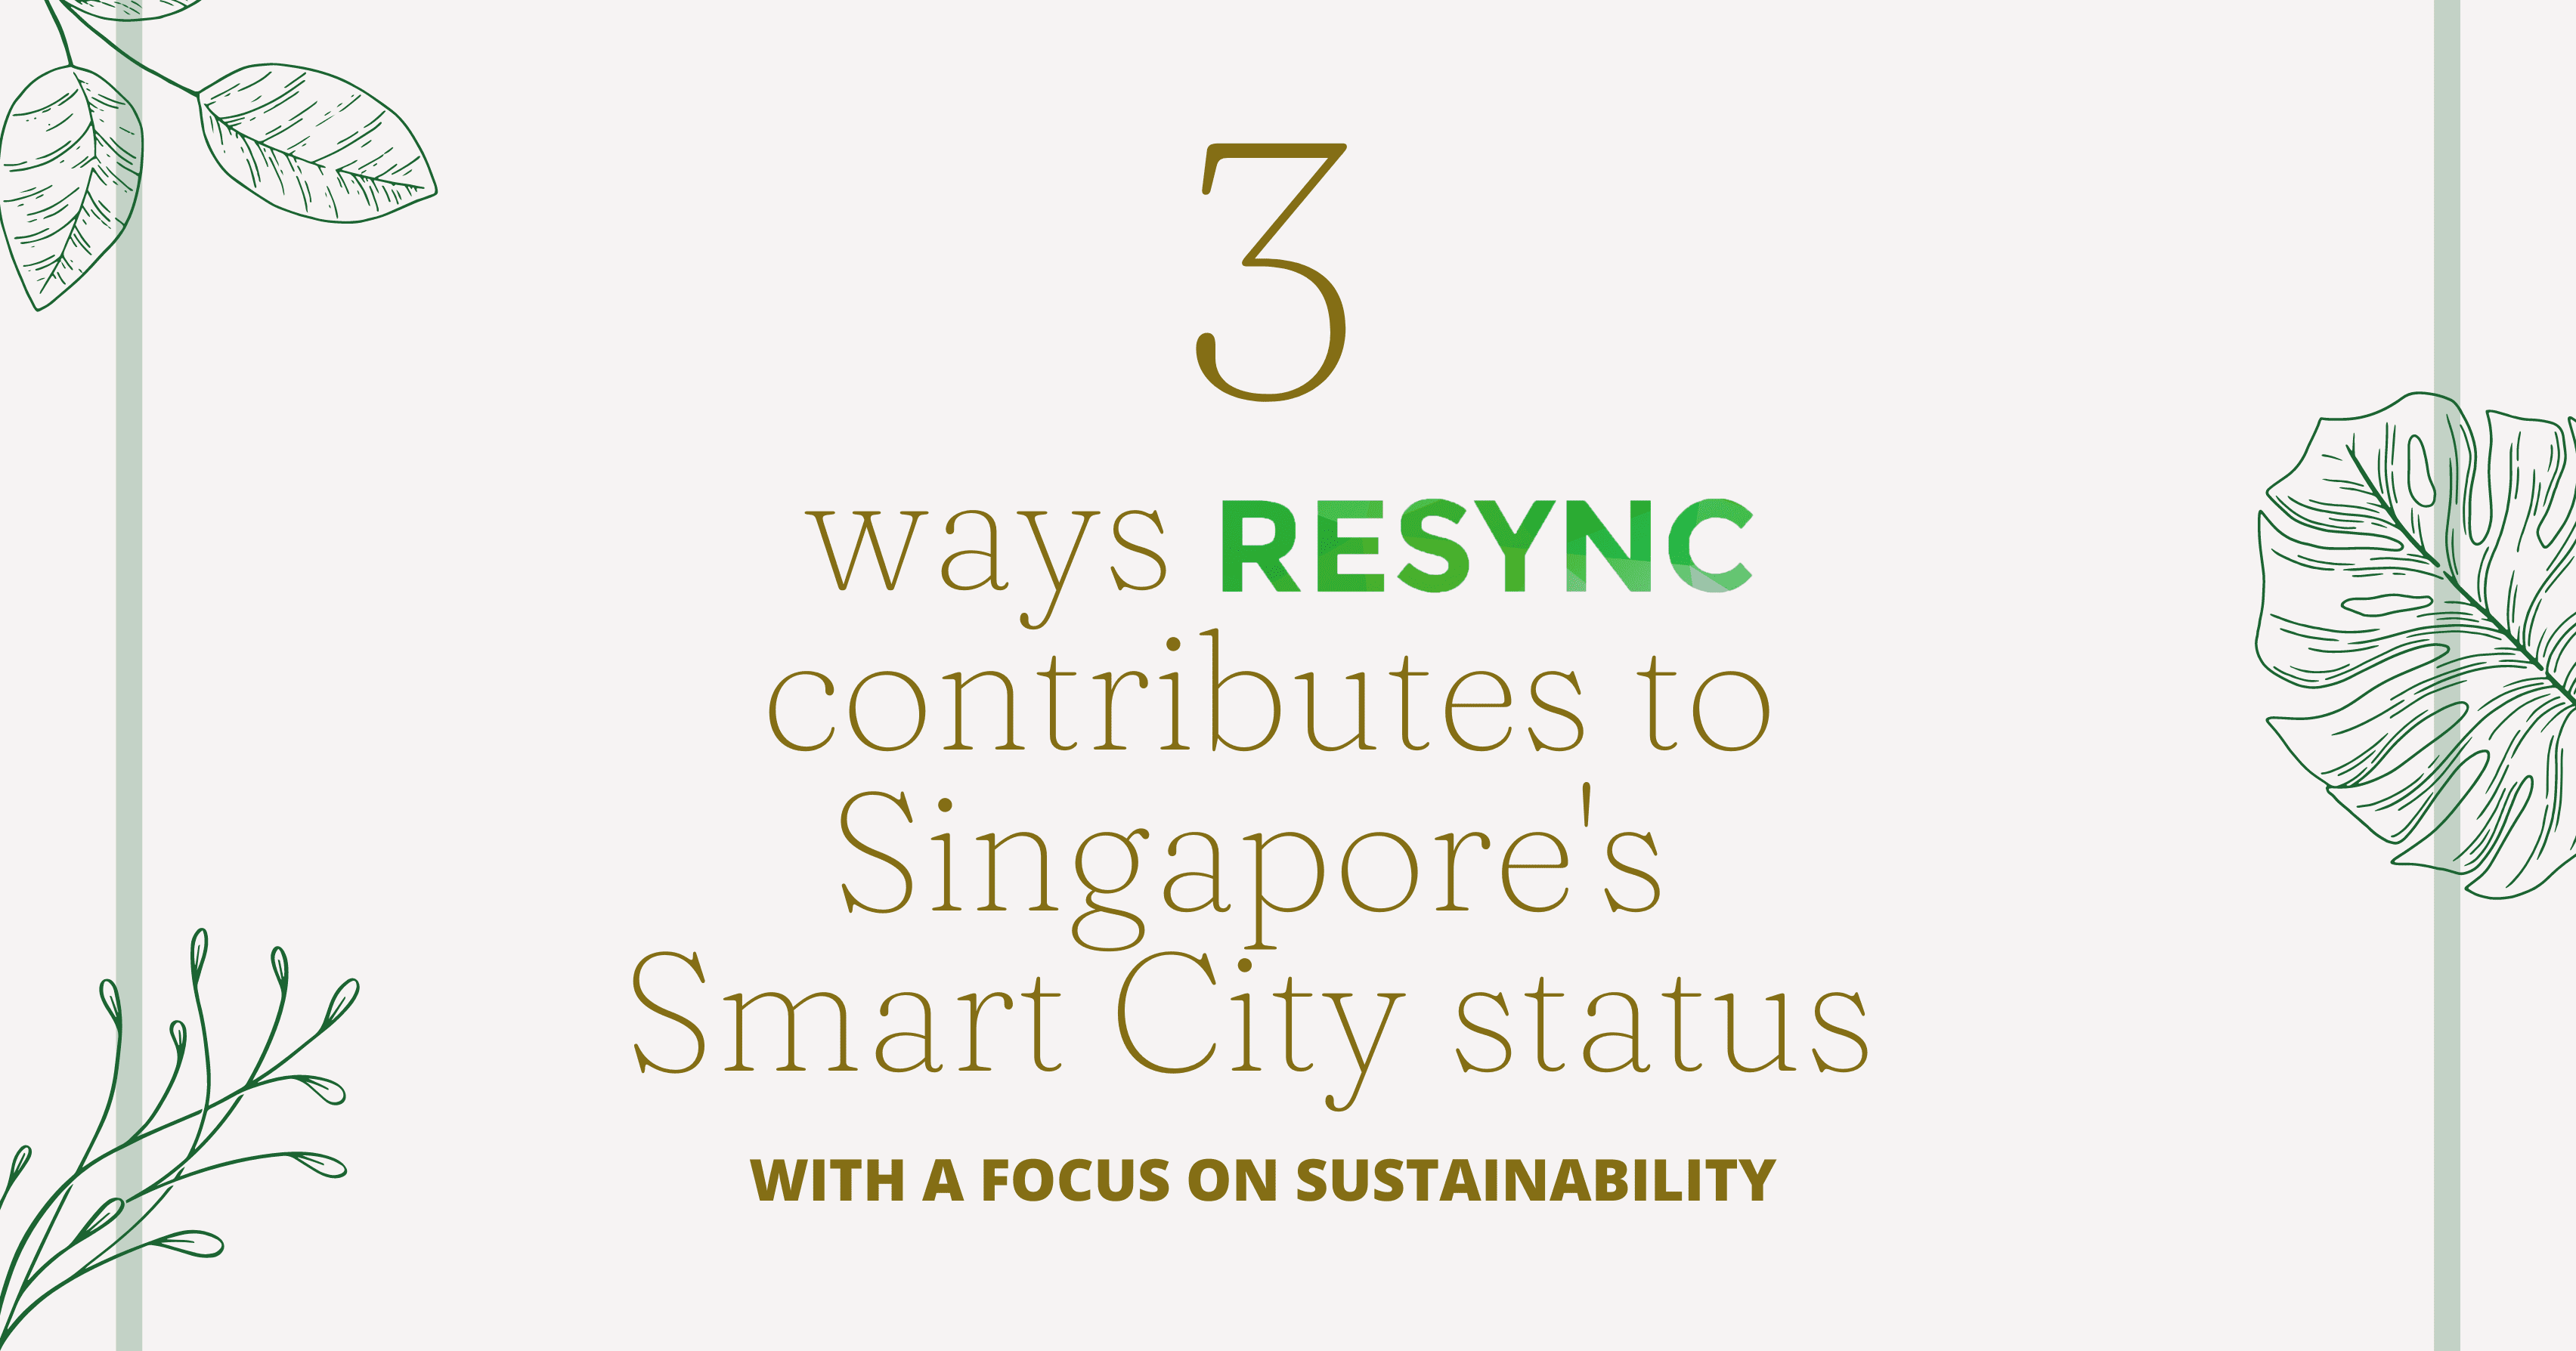 3 Ways Resync Contributes to Singapore’s Smart City Status